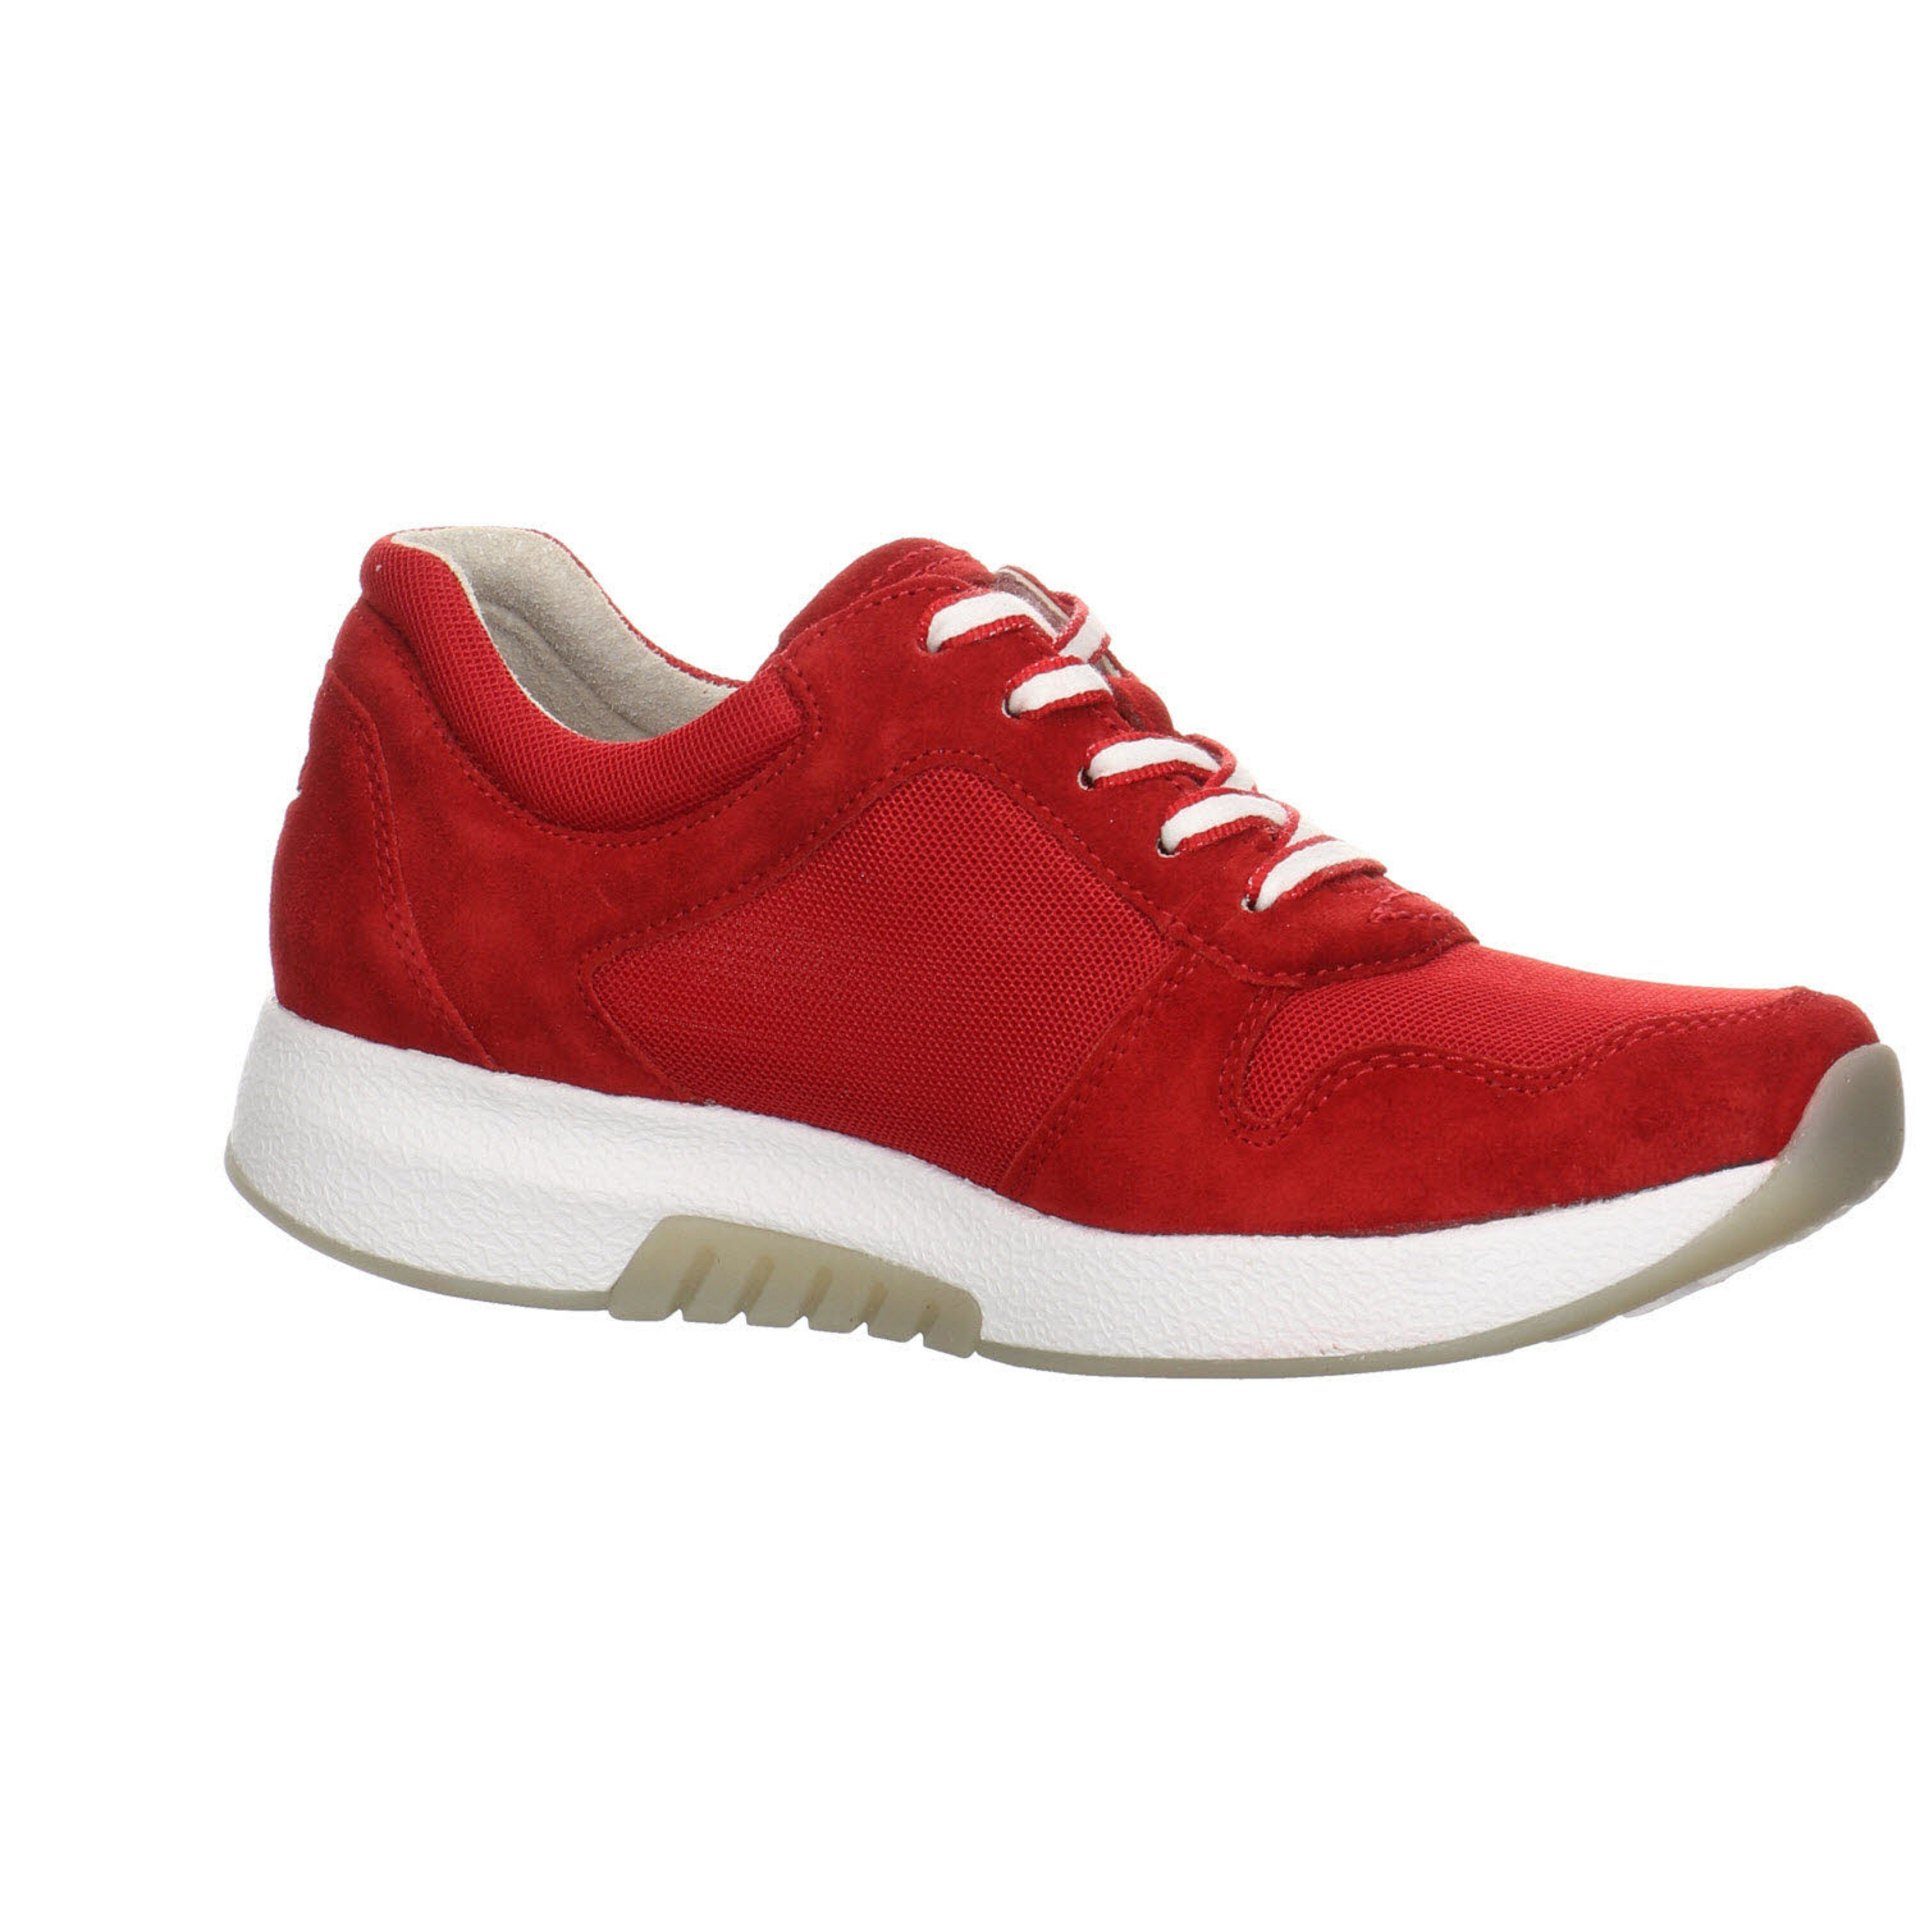 Gabor Damen Sneaker Schuhe Rollingsoft Lederkombination Schnürschuh Schnürschuh red